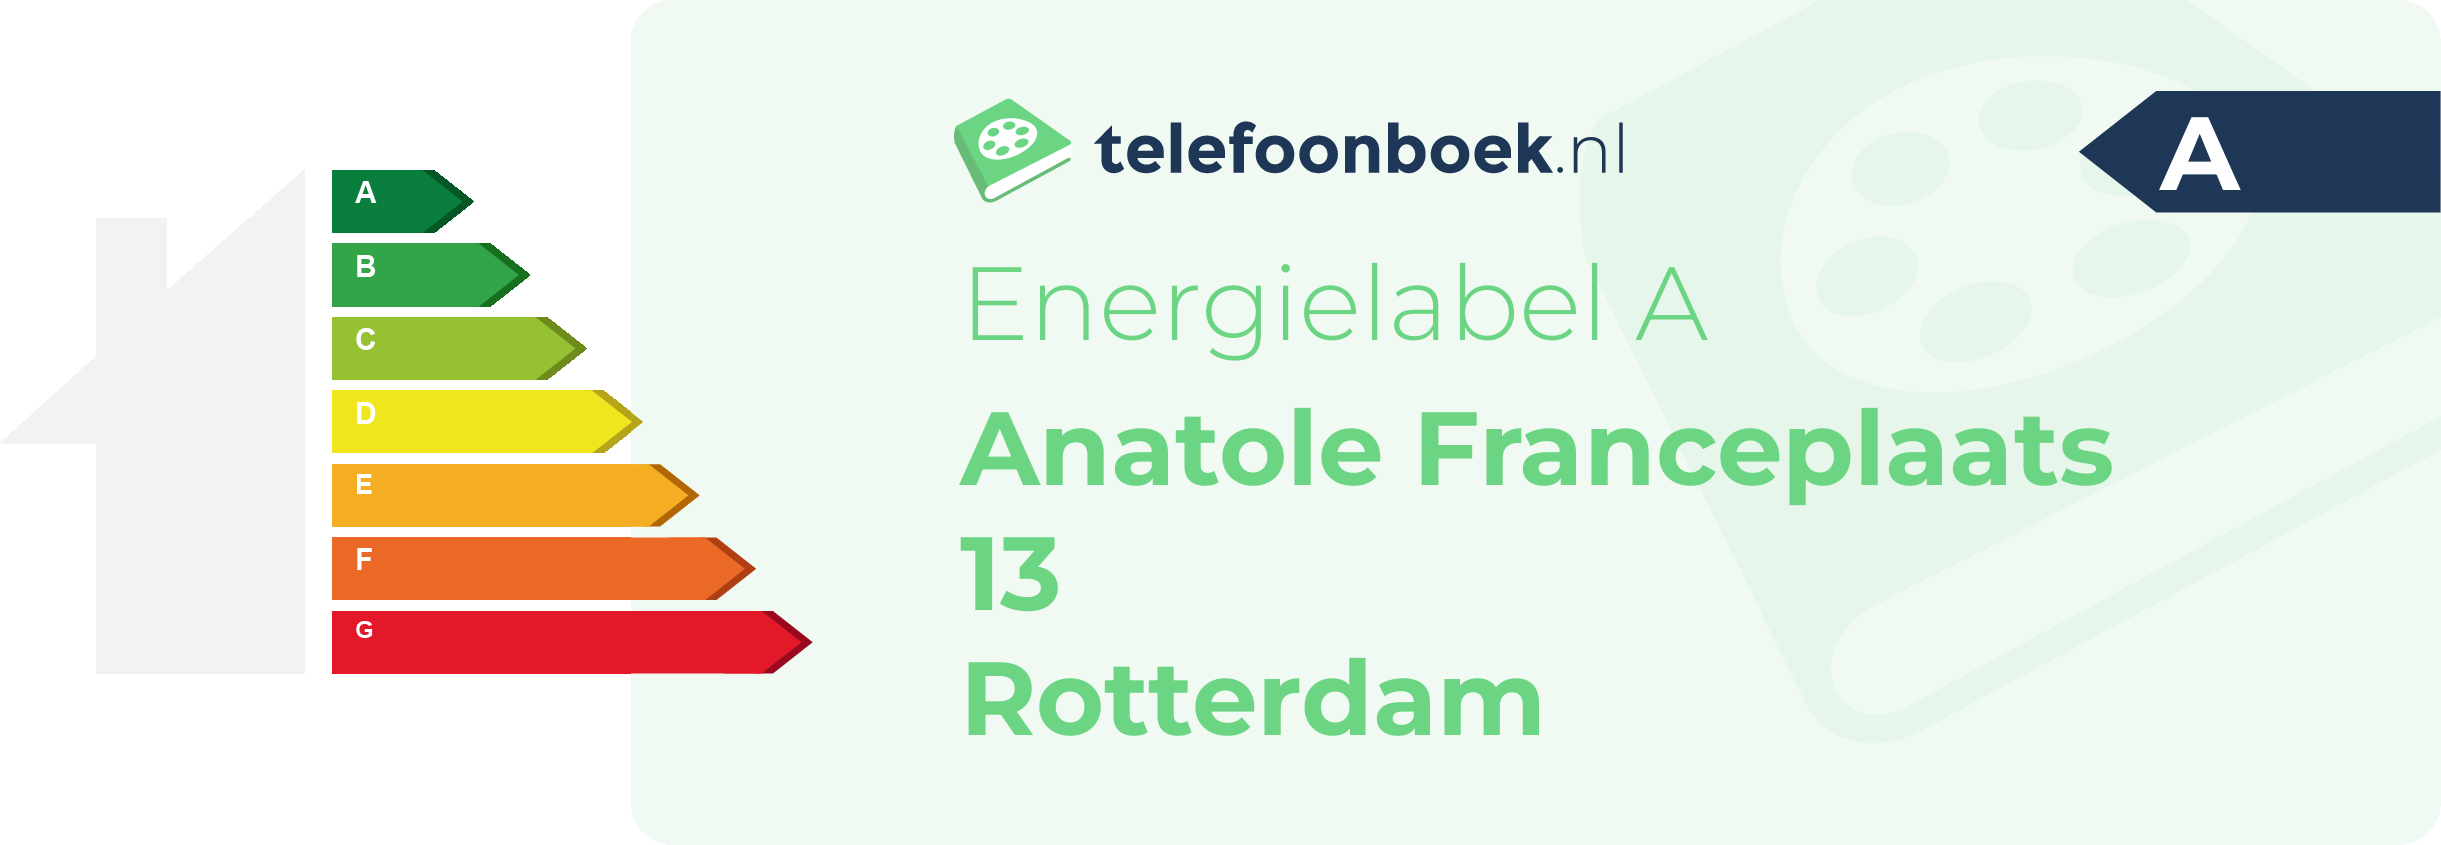 Energielabel Anatole Franceplaats 13 Rotterdam